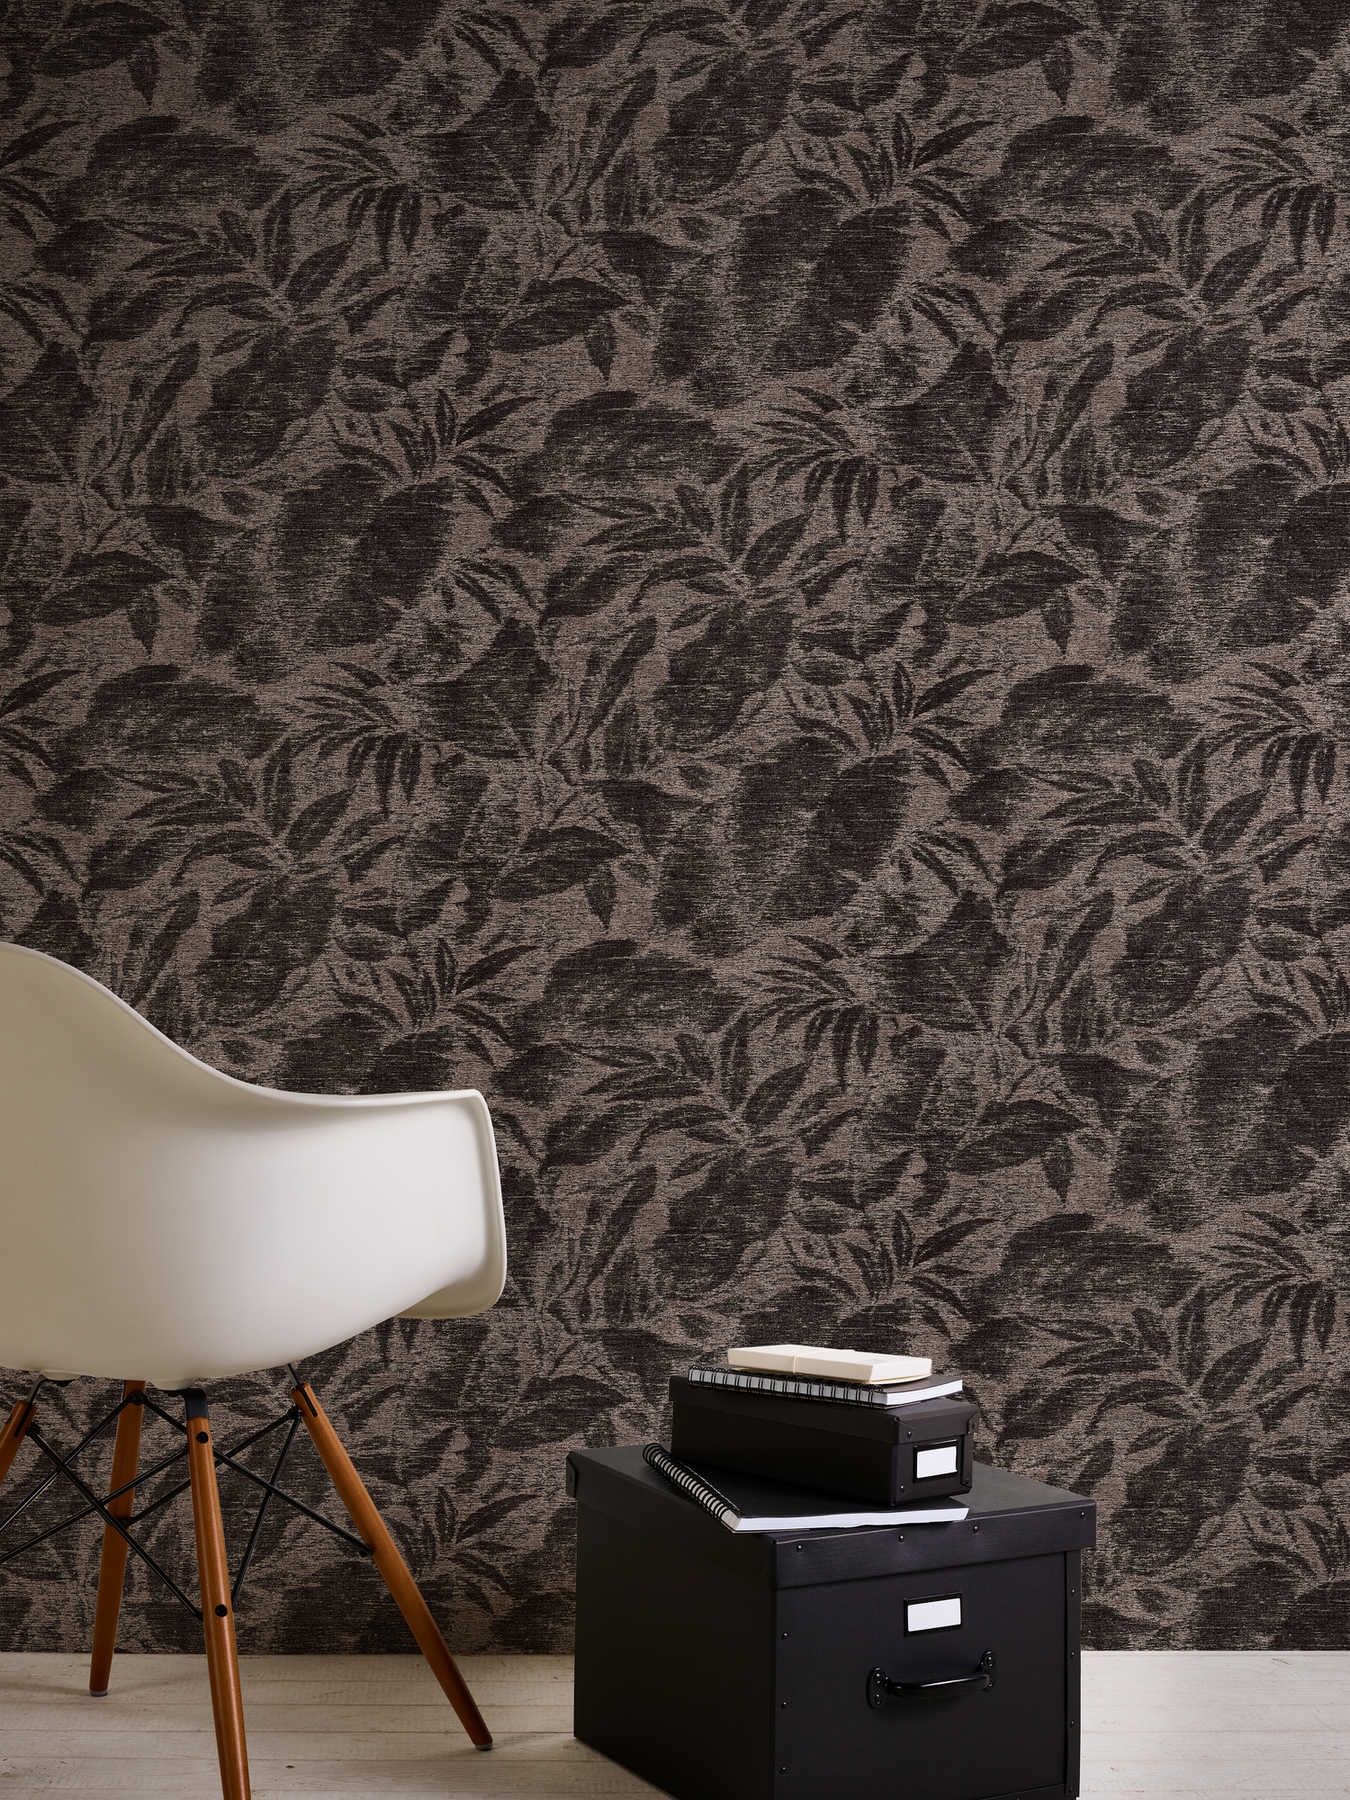             Non-woven wallpaper leaf pattern, mottled - black, brown
        